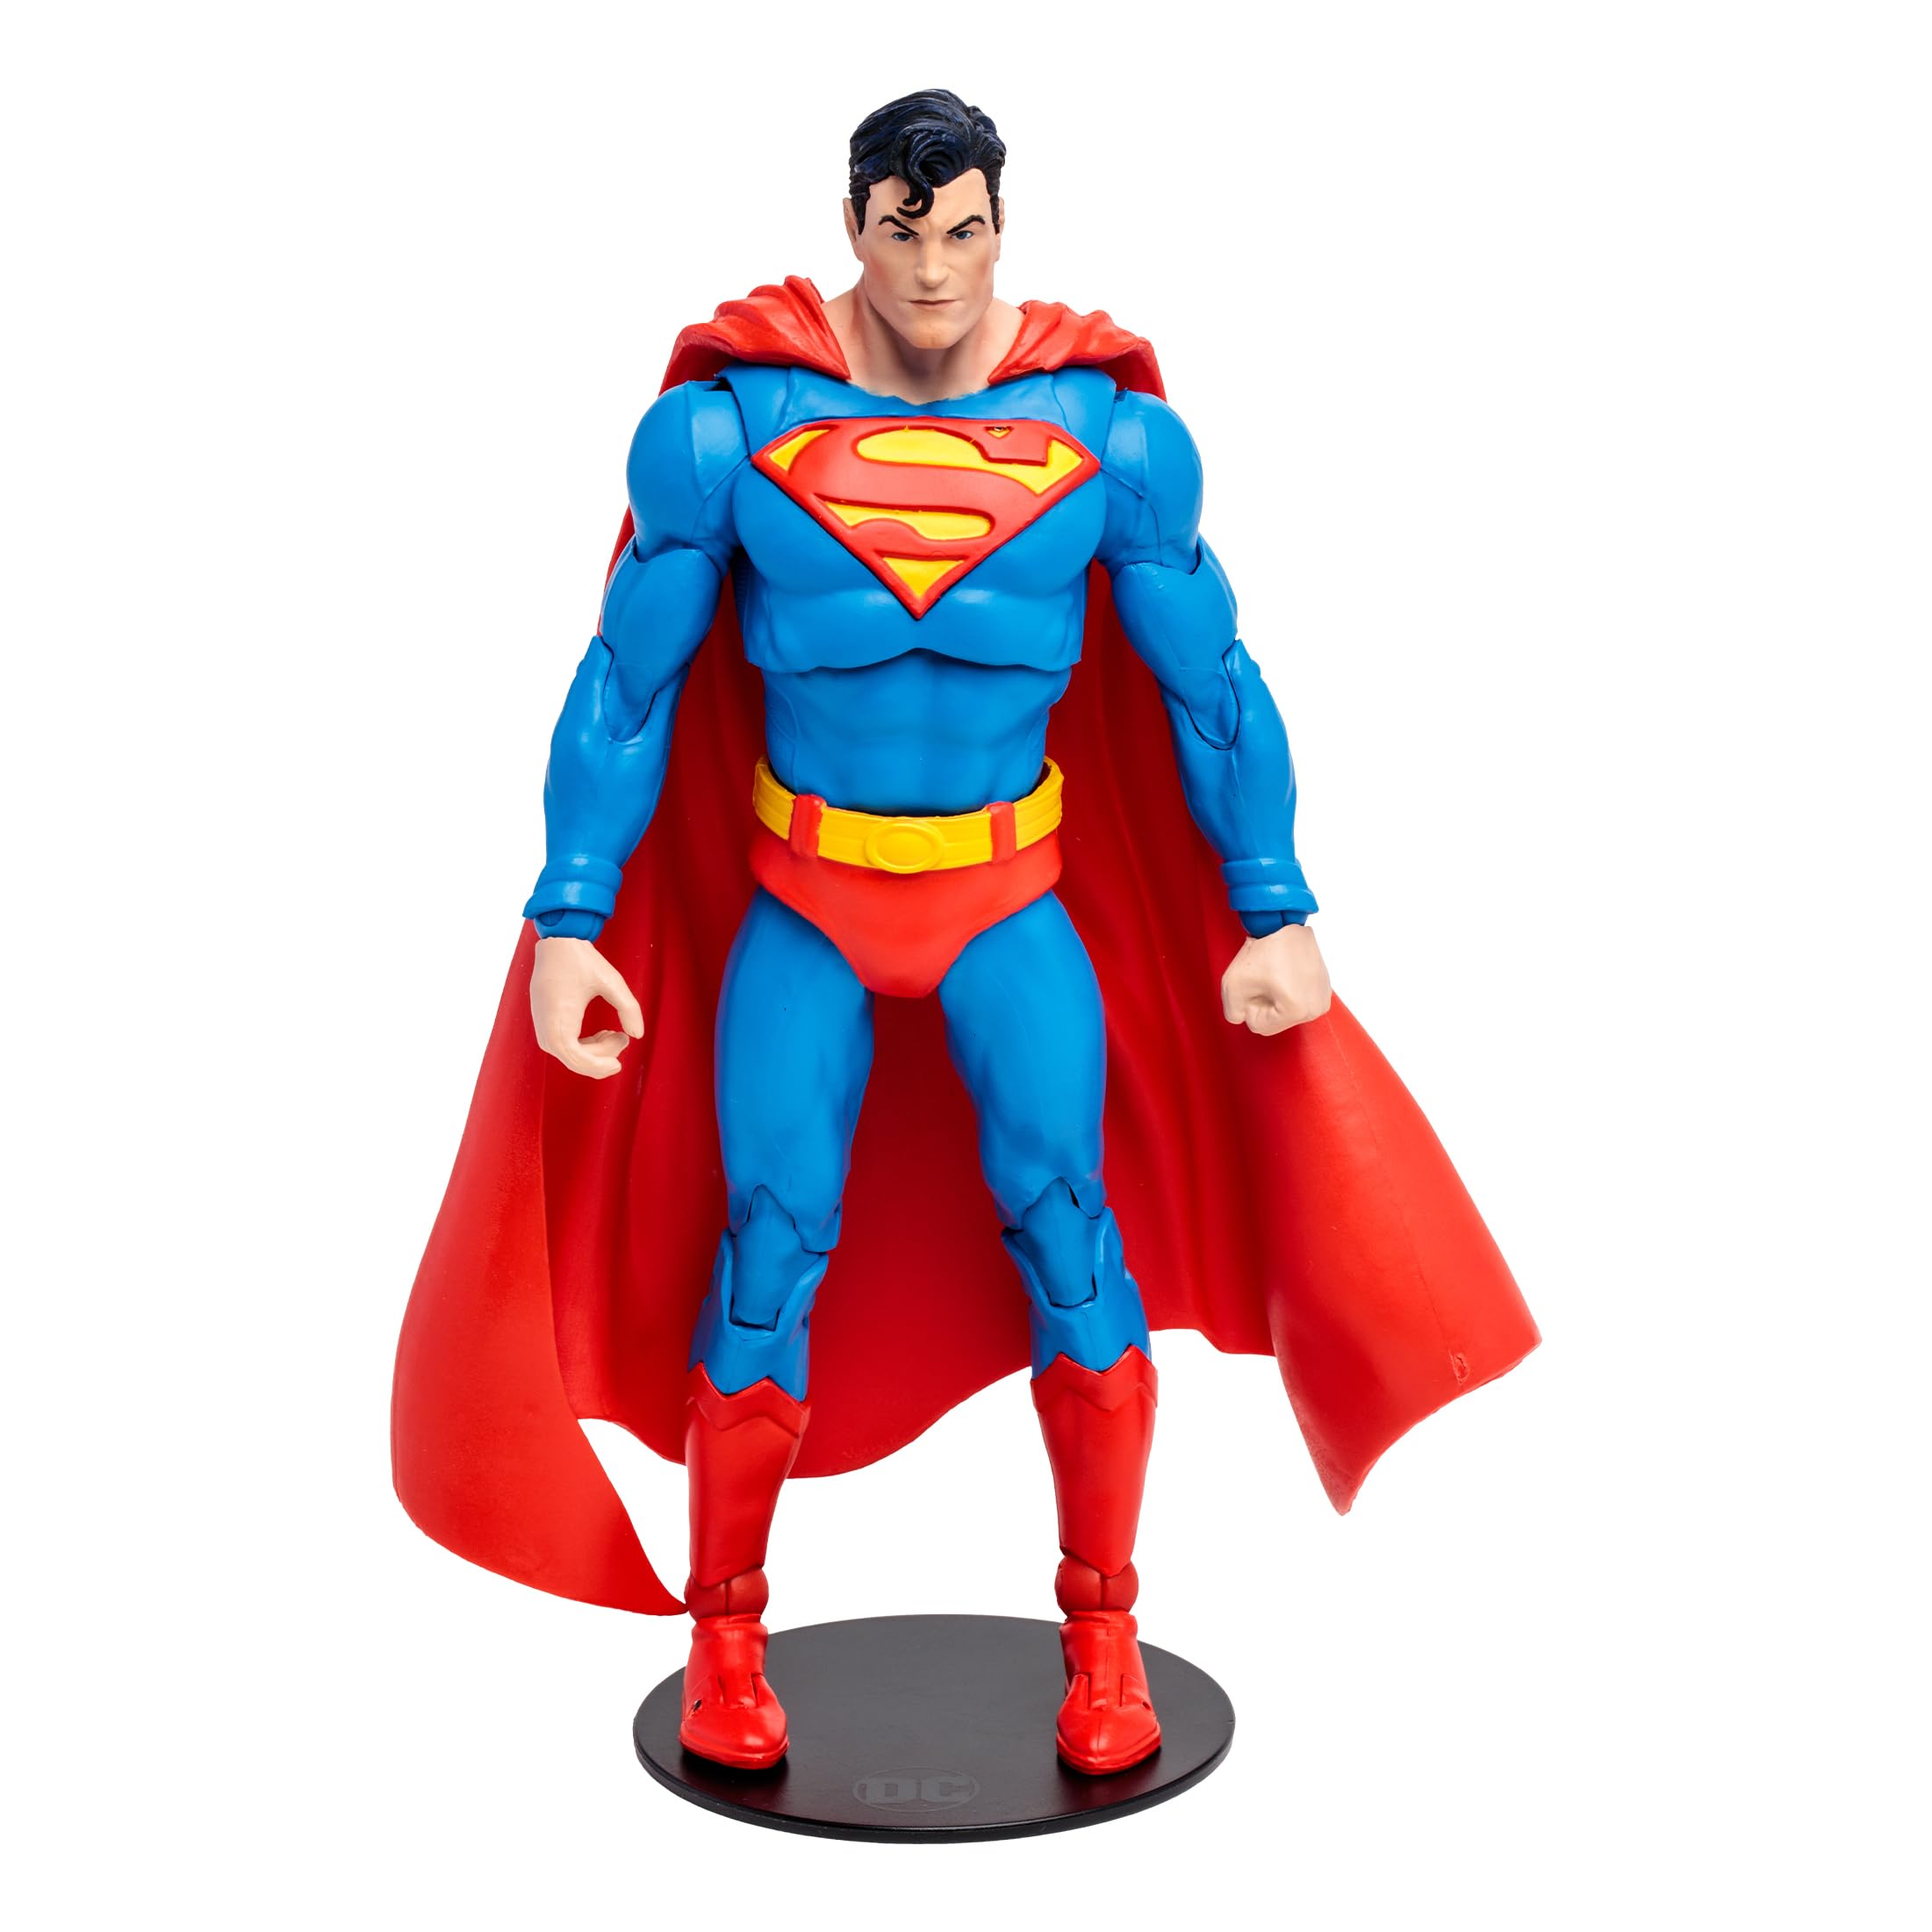 McFarlane Toys - DC Multiverse Atomic Skull vs. Superman 2pk, Gold Label, Amazon Exclusive